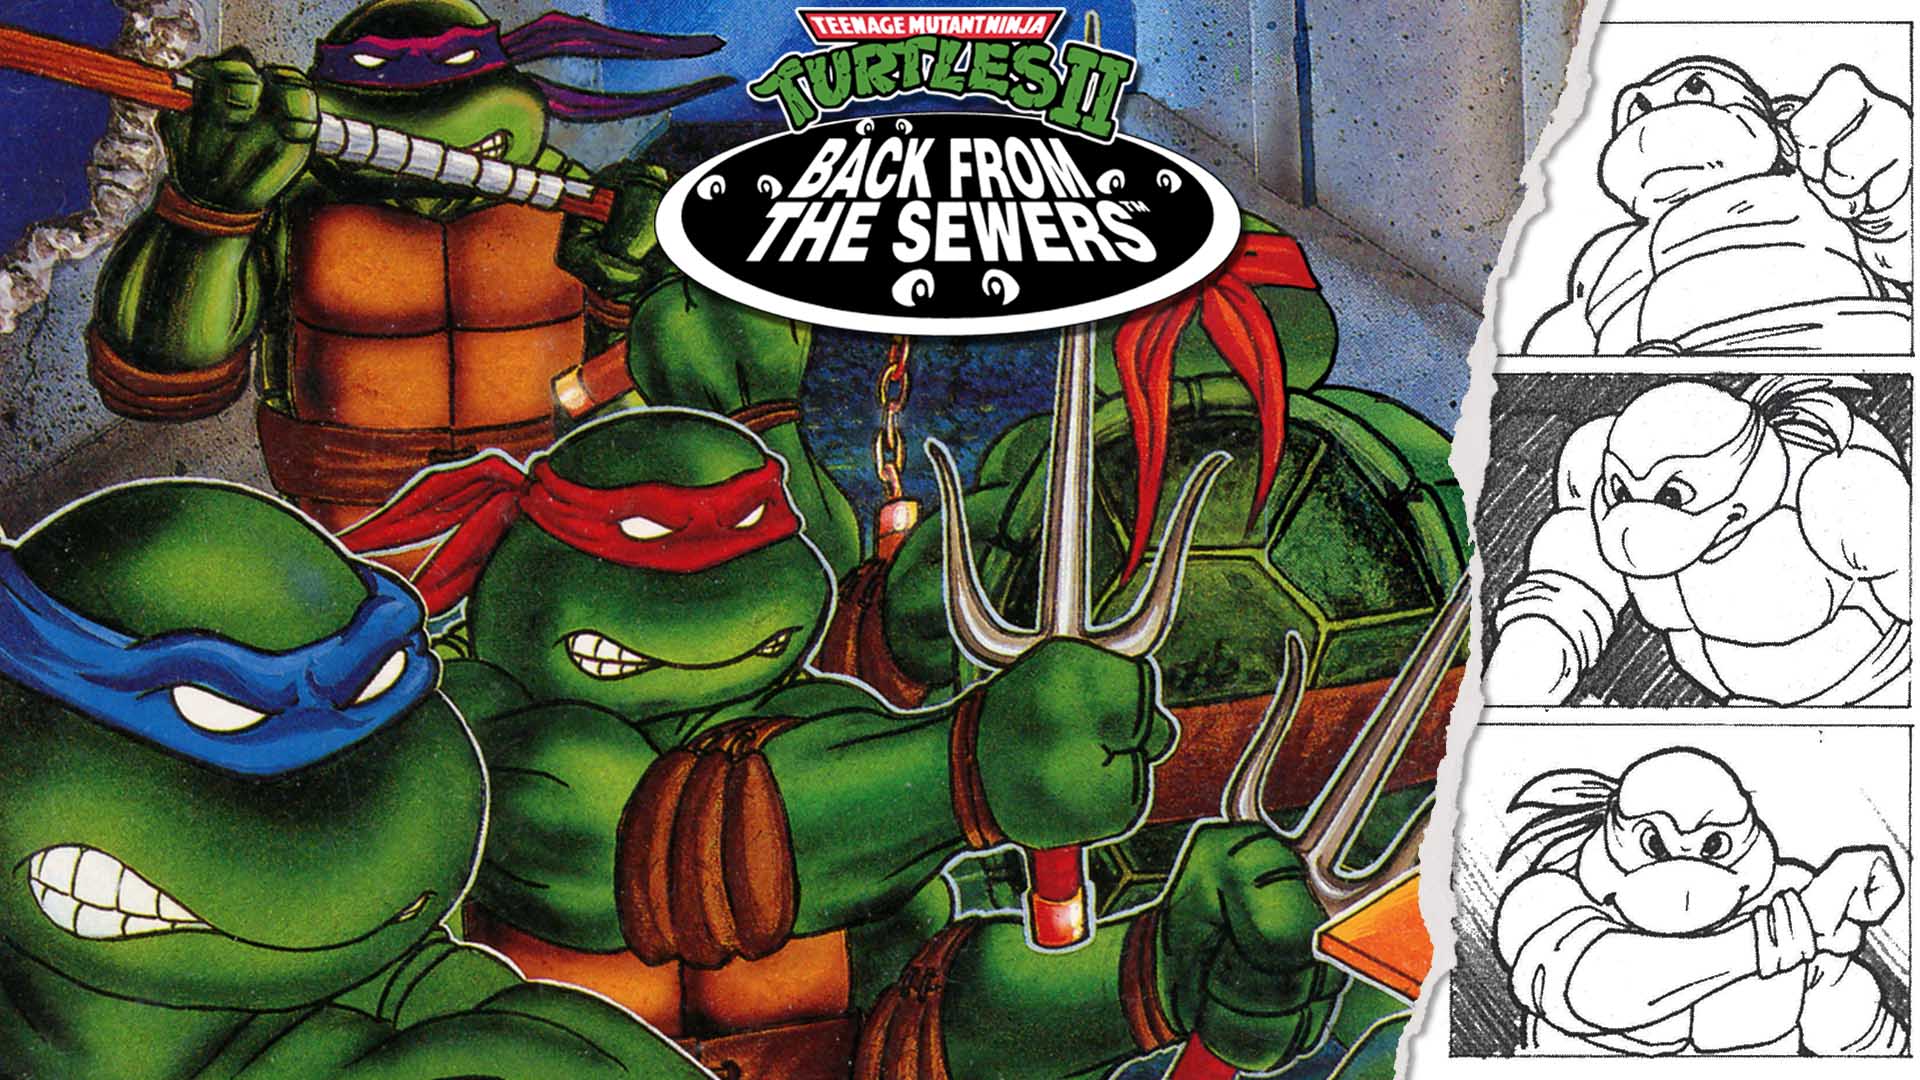 Turtles collections. Cowabunga Черепашки ниндзя. Teenage Mutant Ninja Turtles: the Cowabunga collection. Cowabunga Черепашки ниндзя боссы. TMNT the Cowabunga collection PC.